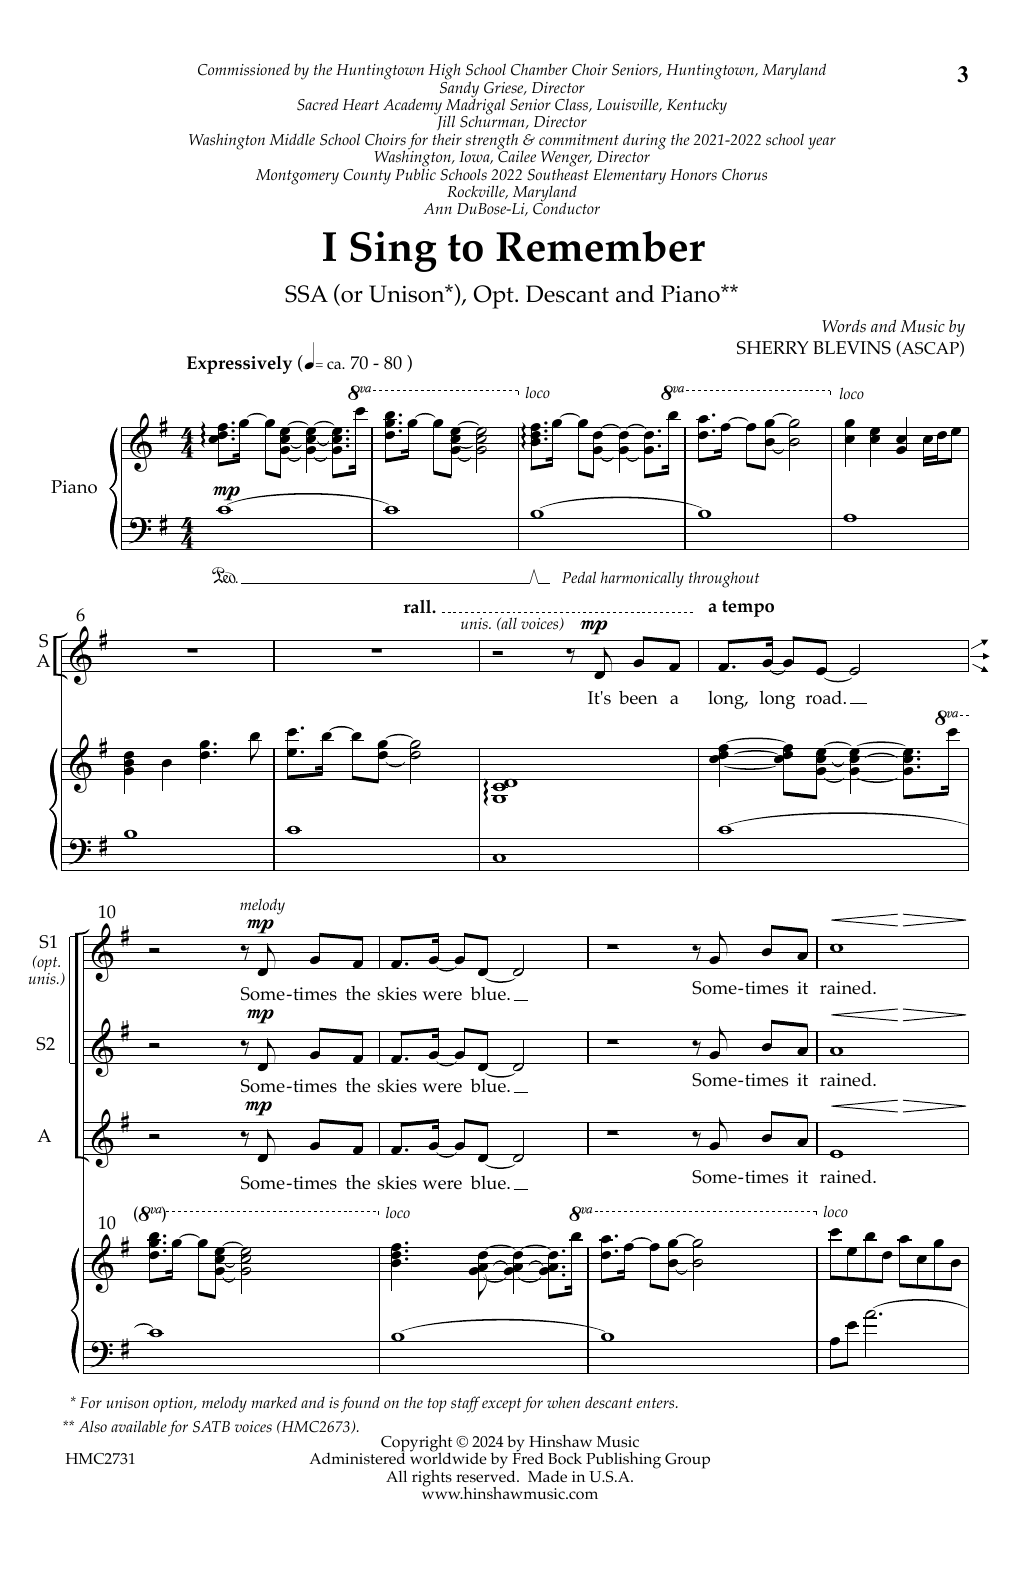 Sherry Blevins I Sing To Remember sheet music notes printable PDF score